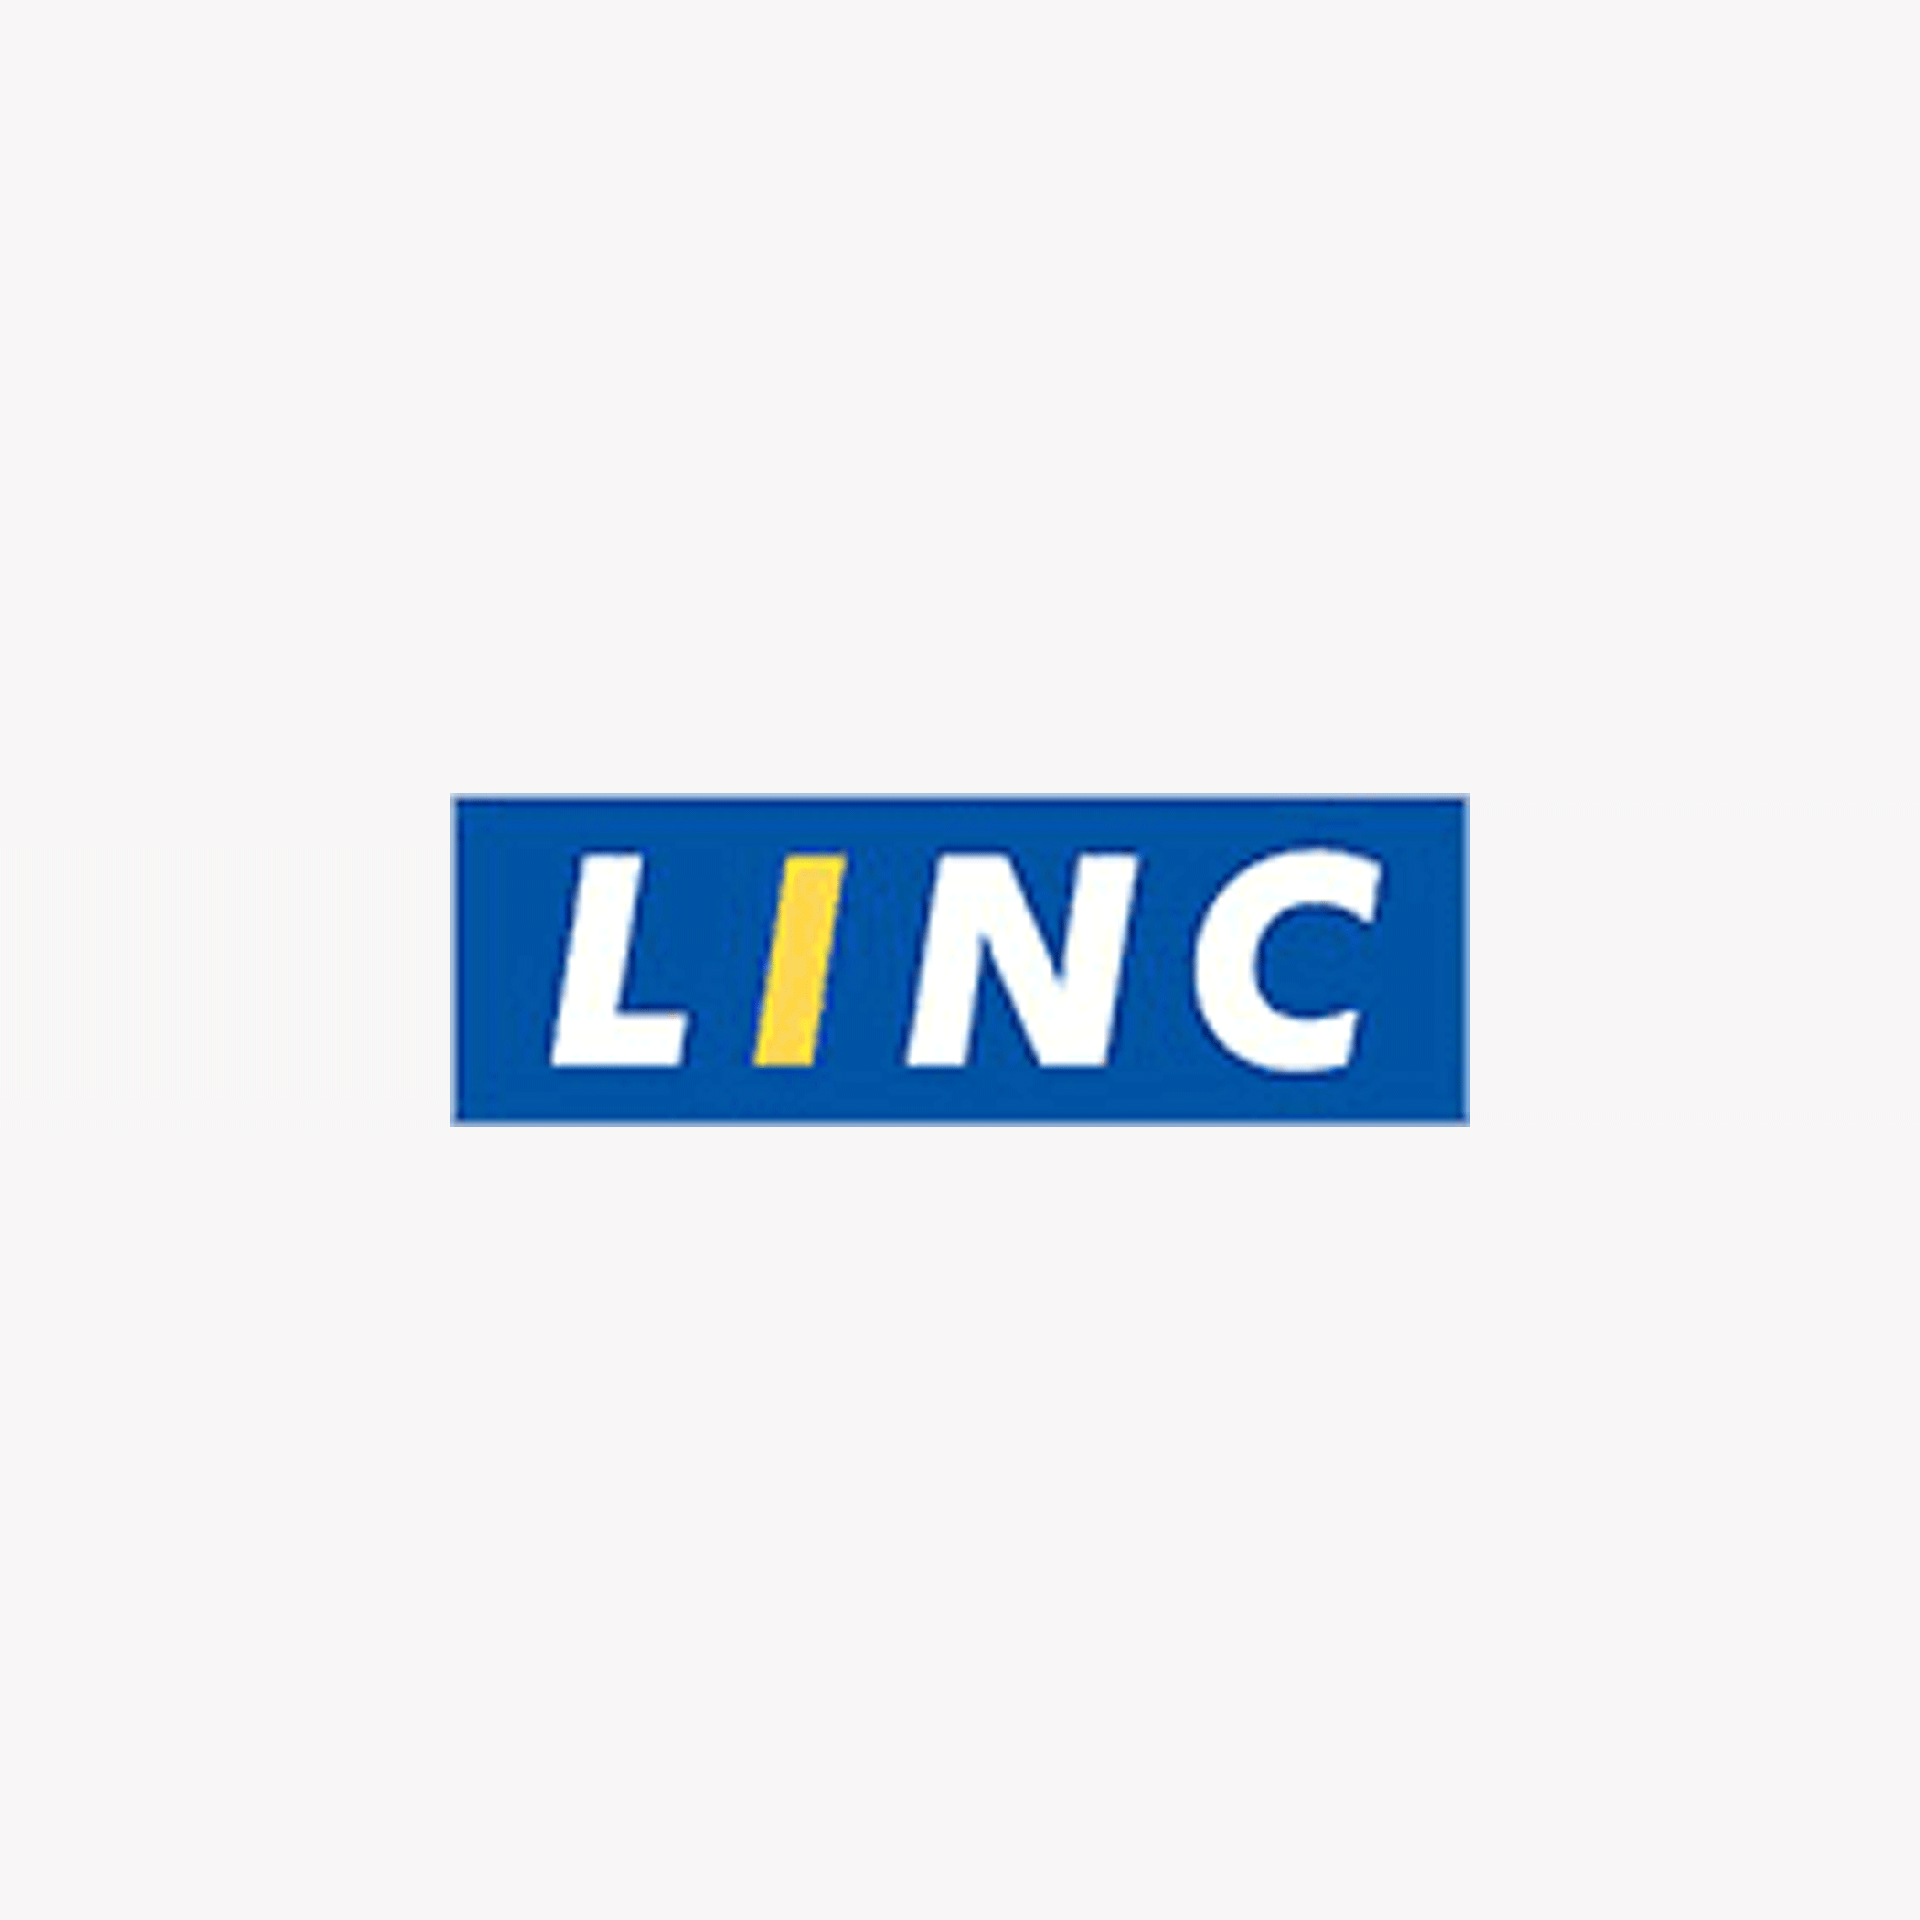 Product Brand: Linc